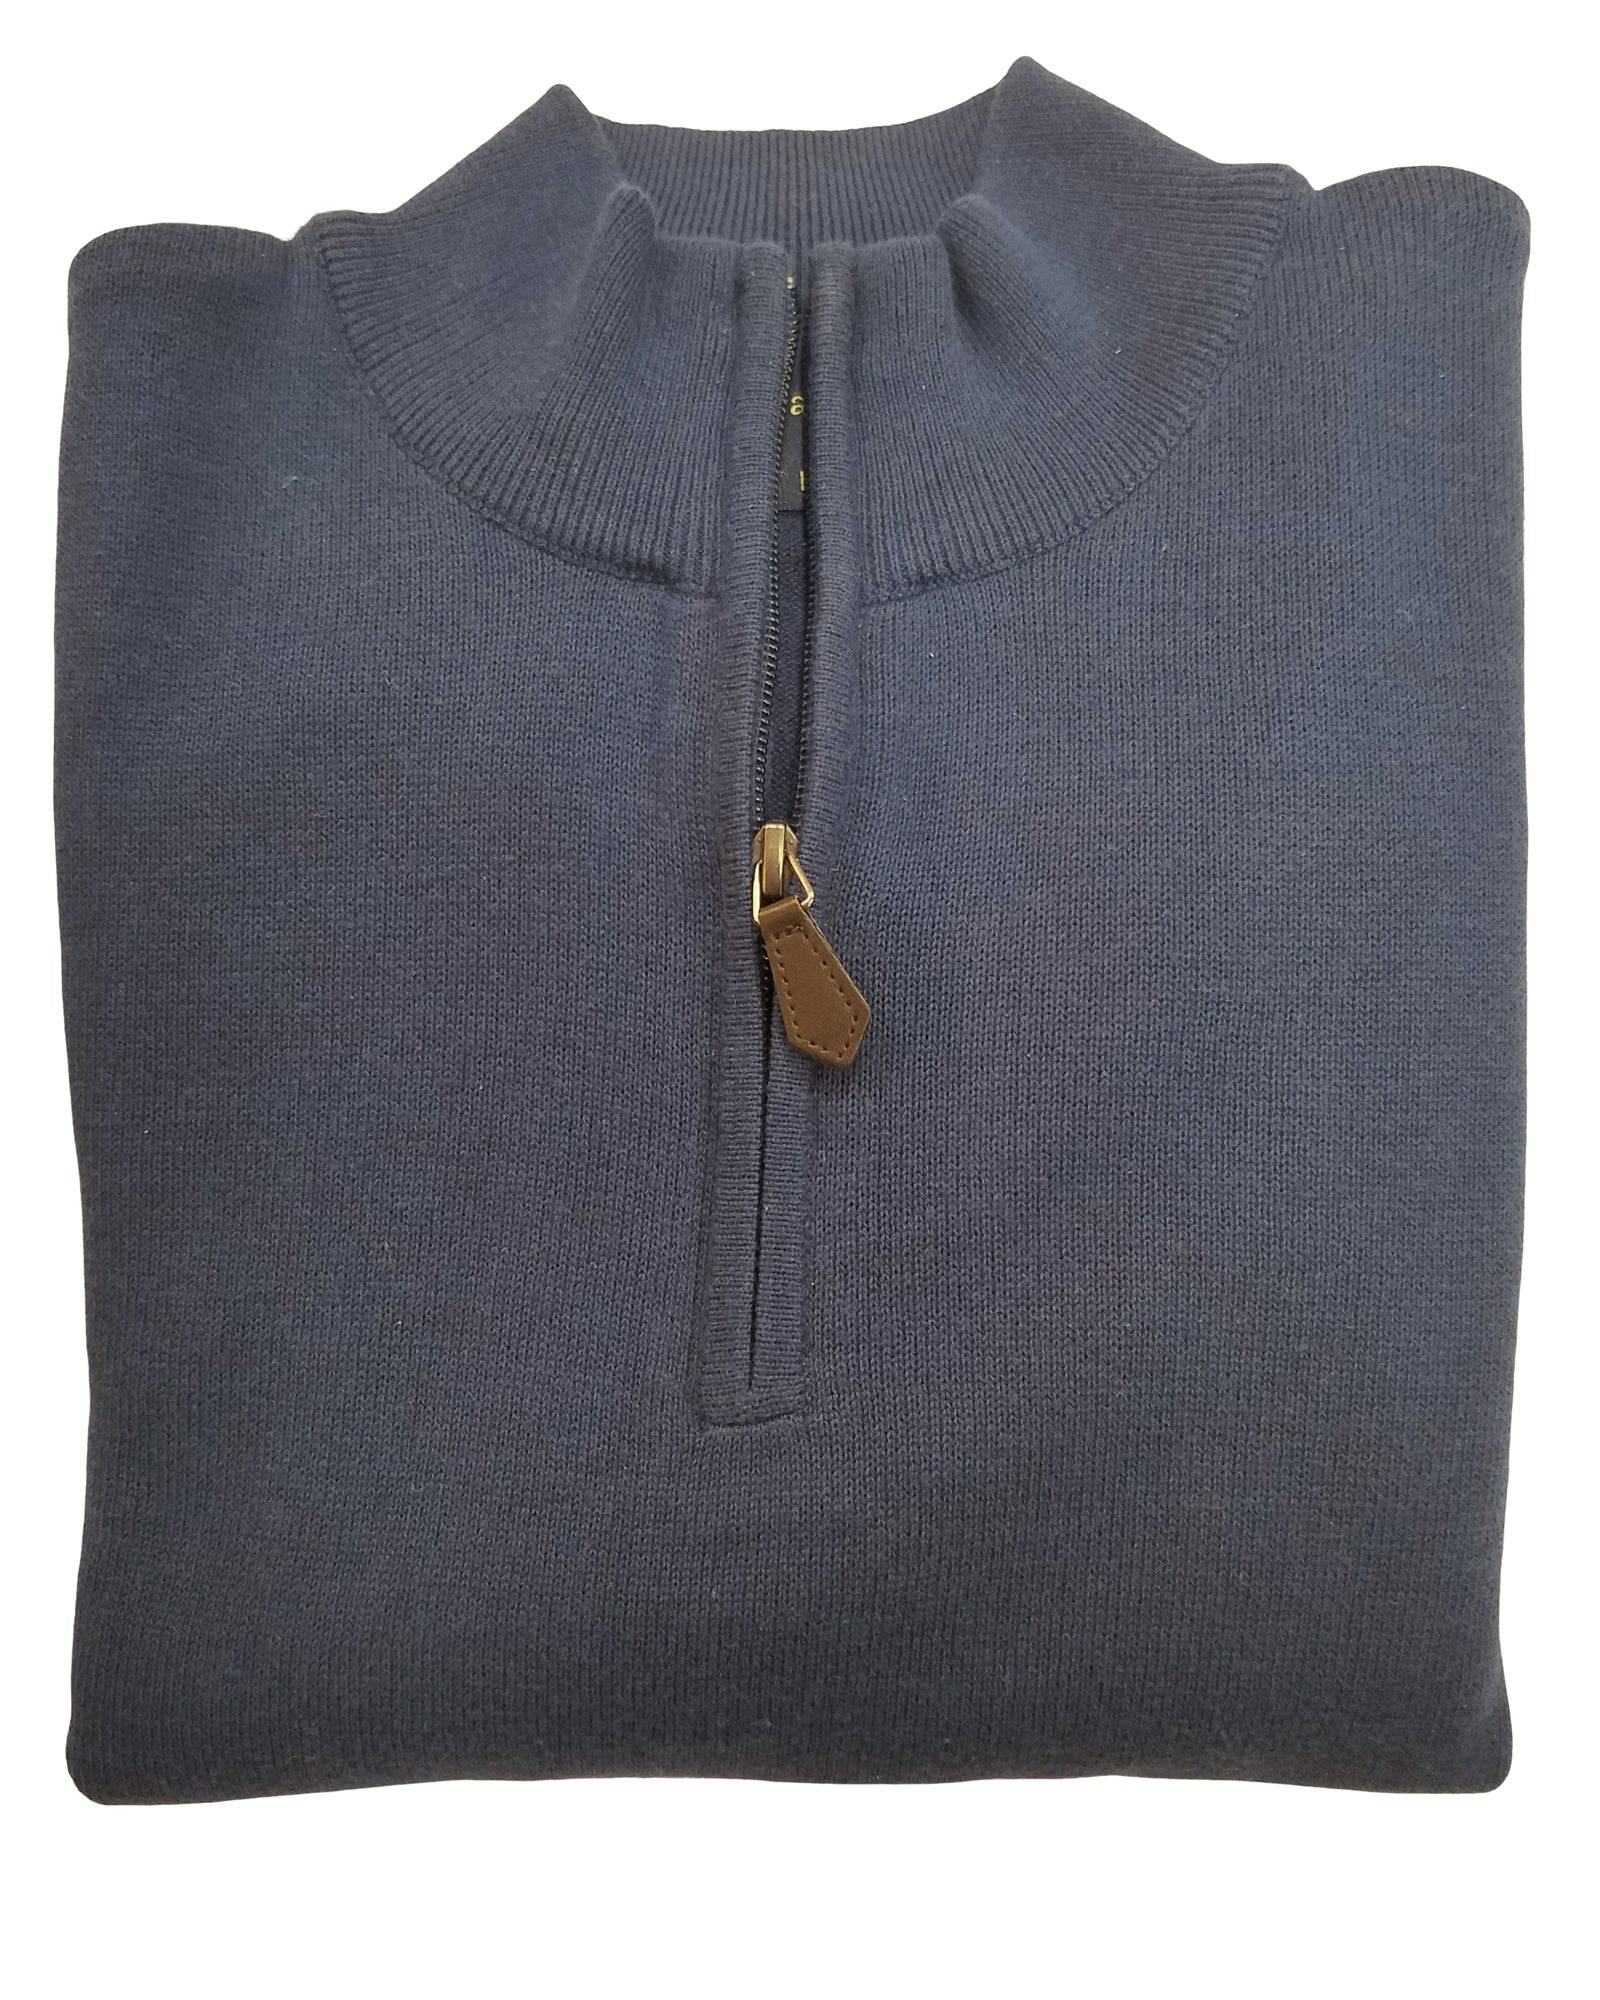 1/4 Zip Mock Sweater in Dark Denim Cotton Blend - Rainwater's Men's Clothing and Tuxedo Rental